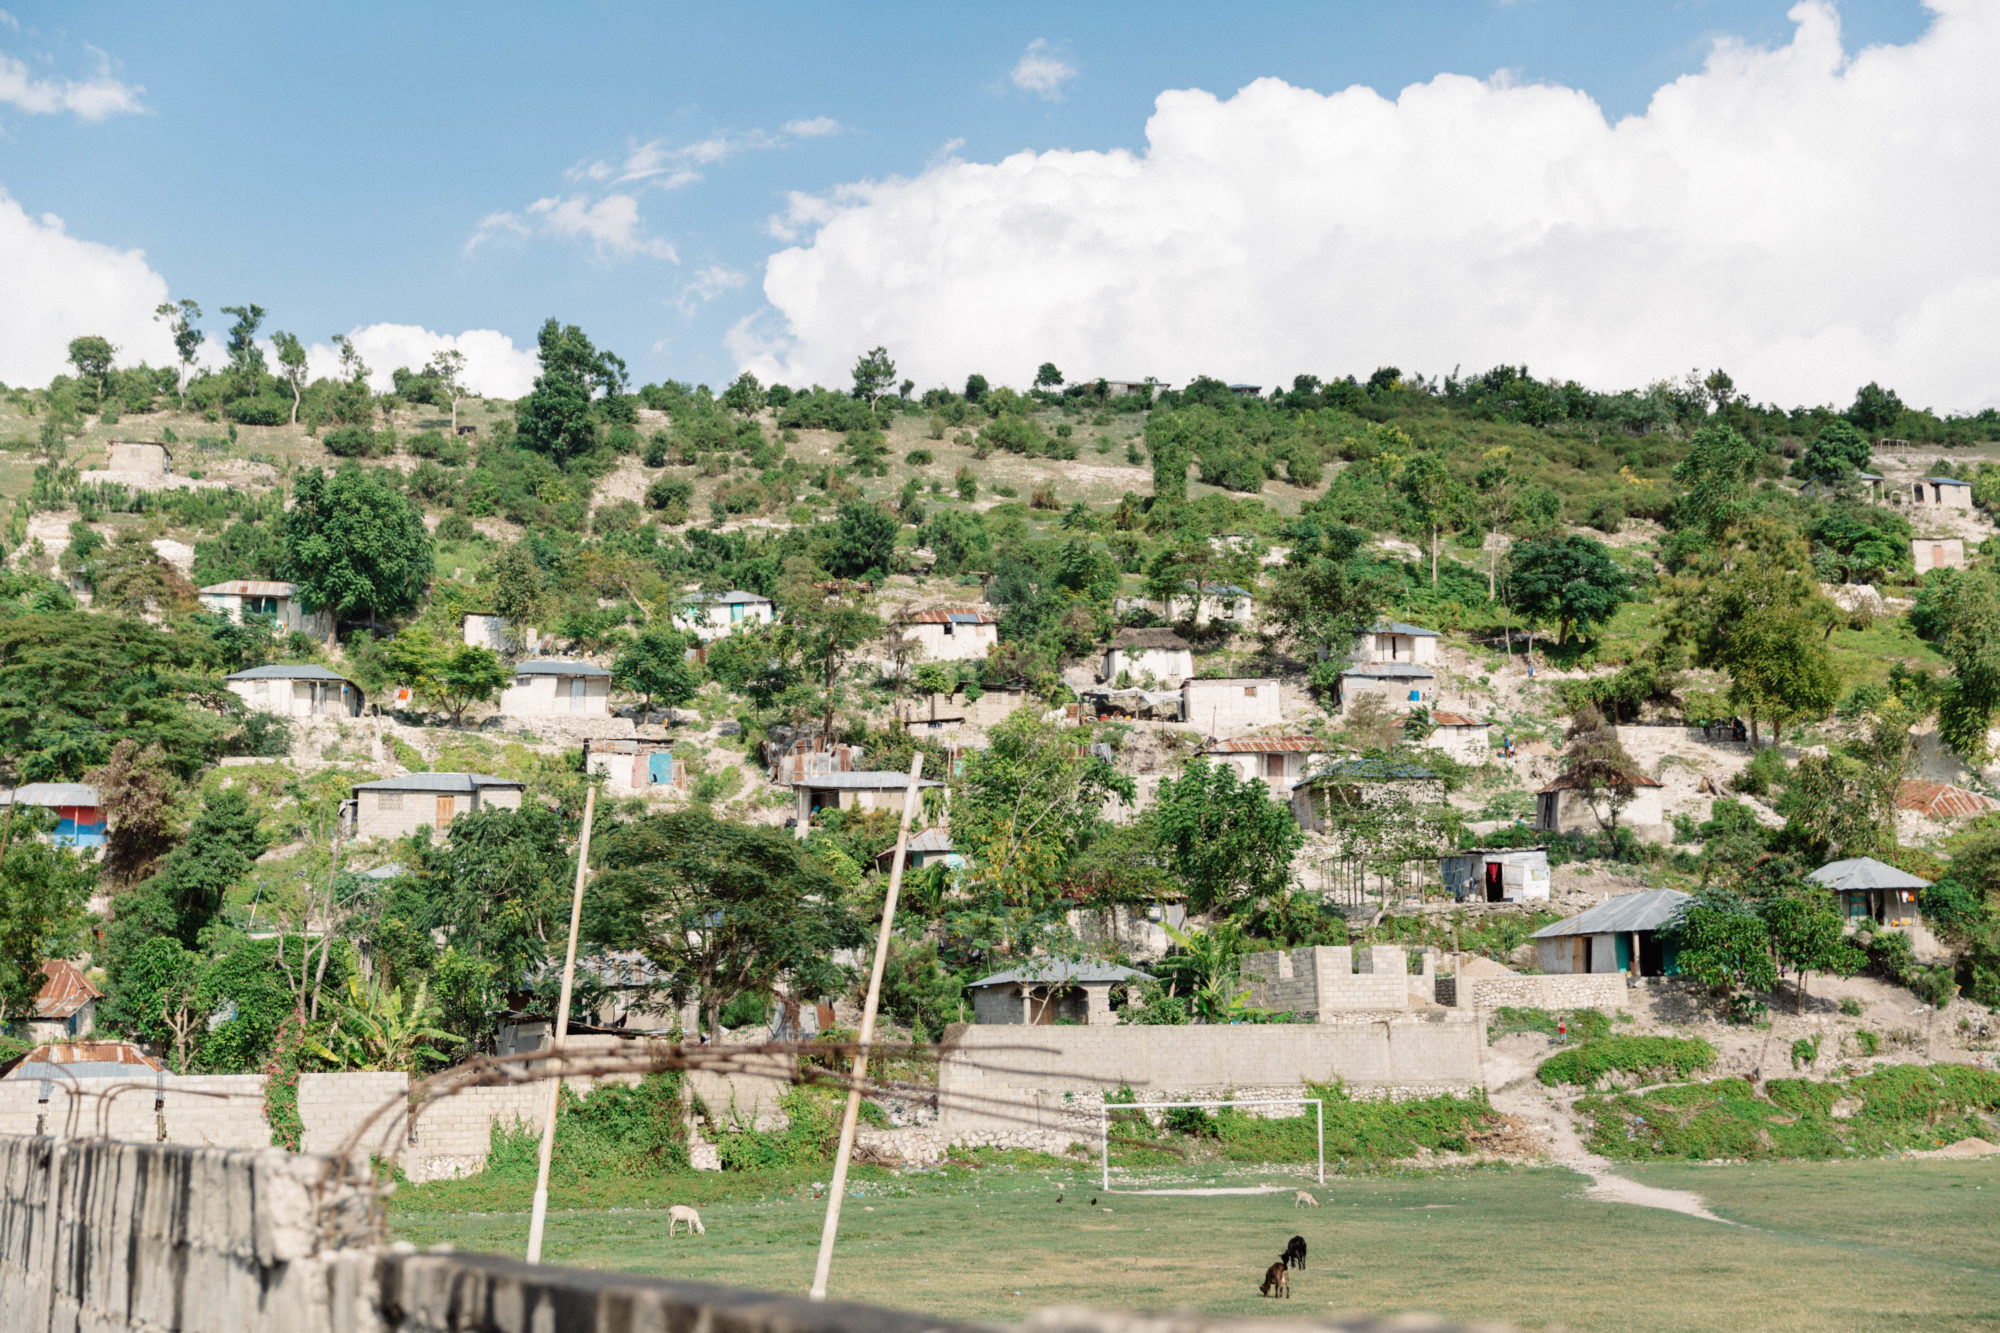 Portraits of Haiti